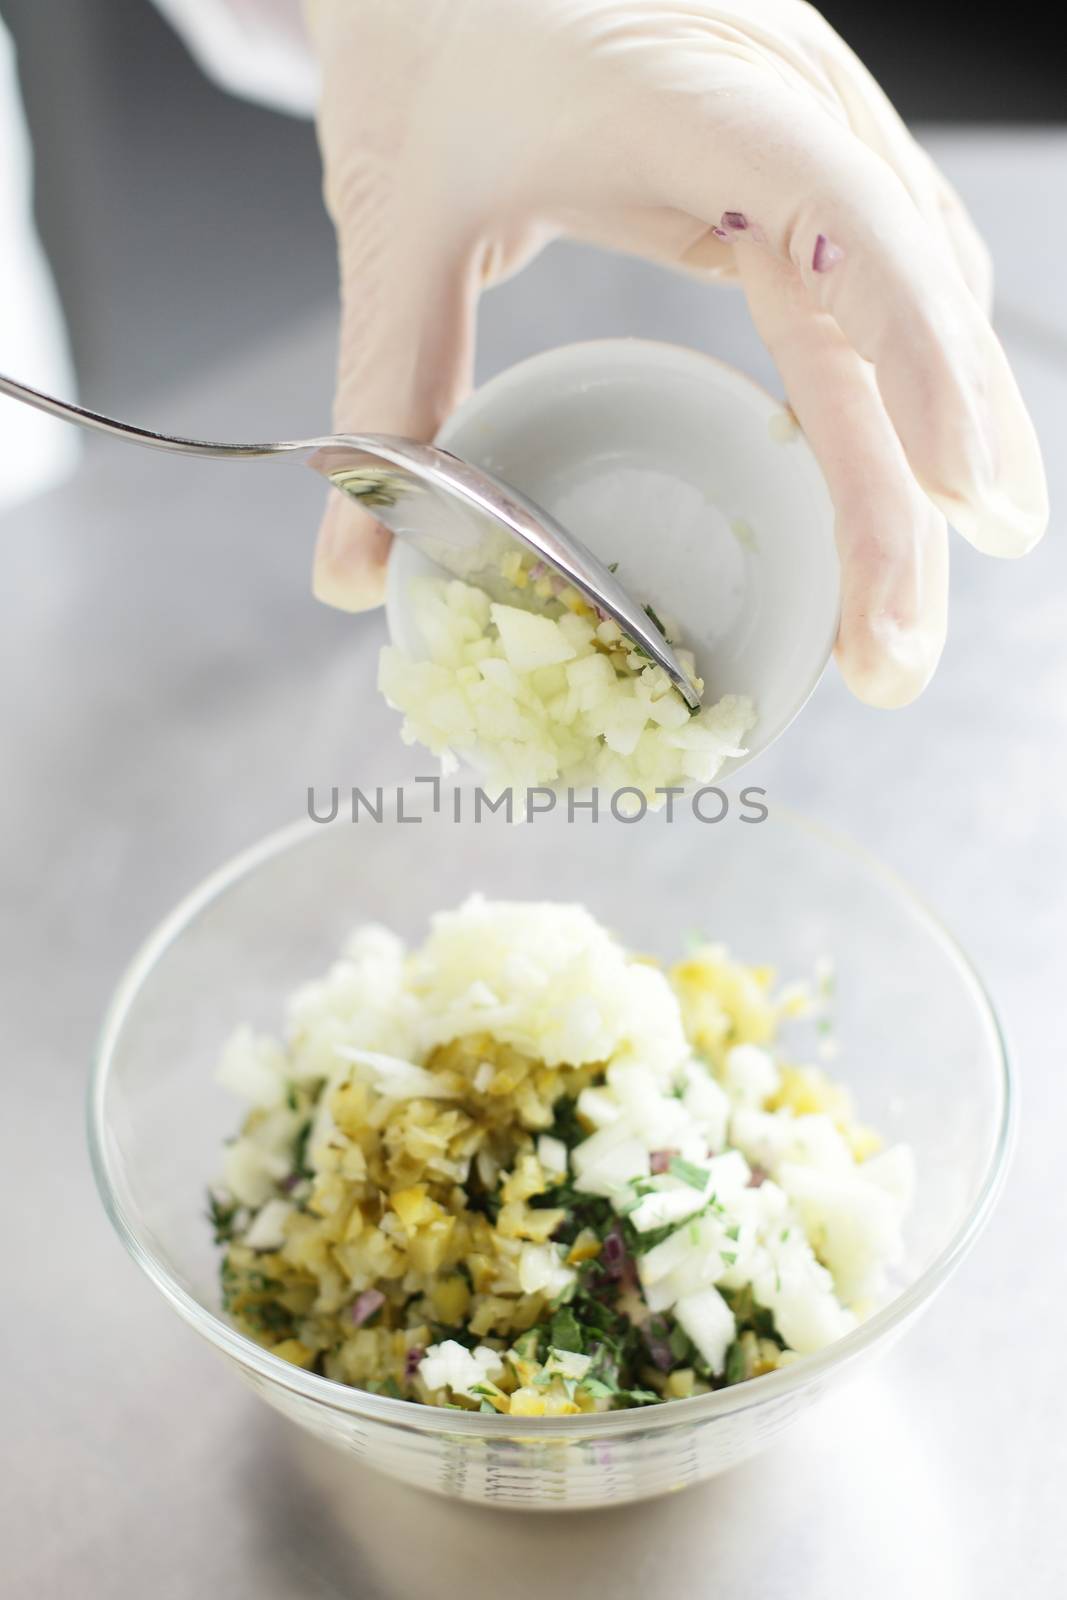 preparing of tasty food by fiphoto